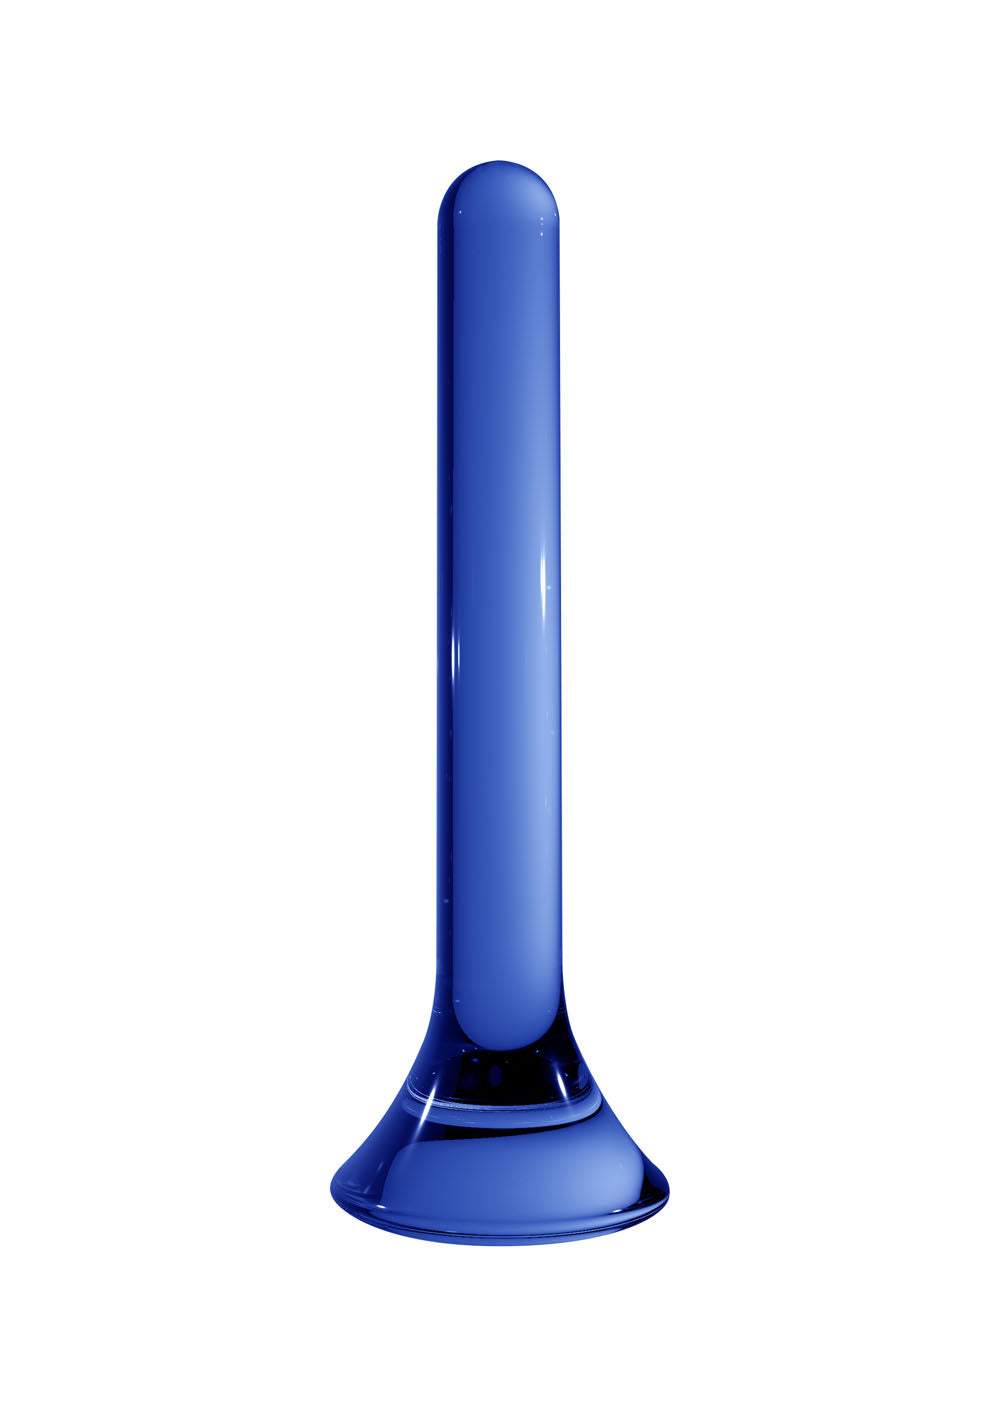 Chrystalino Tower - Blue CHR-CHR003BLU